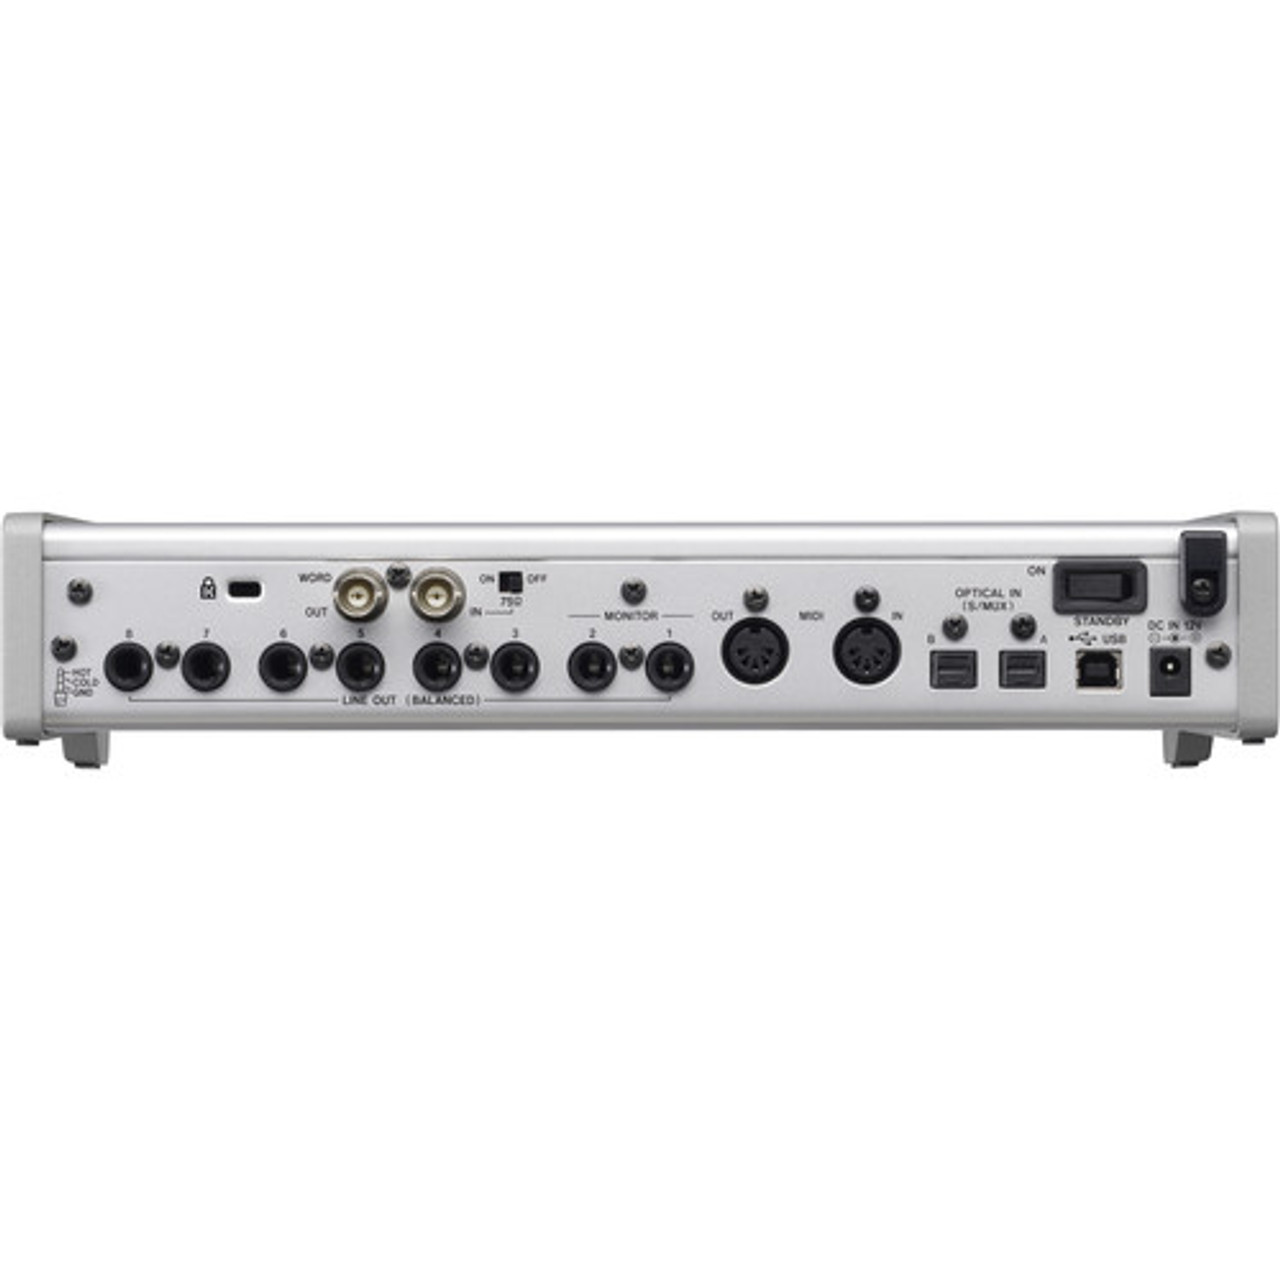  Tascam US-16x08 Rackmount USB Audio/MIDI Interface for